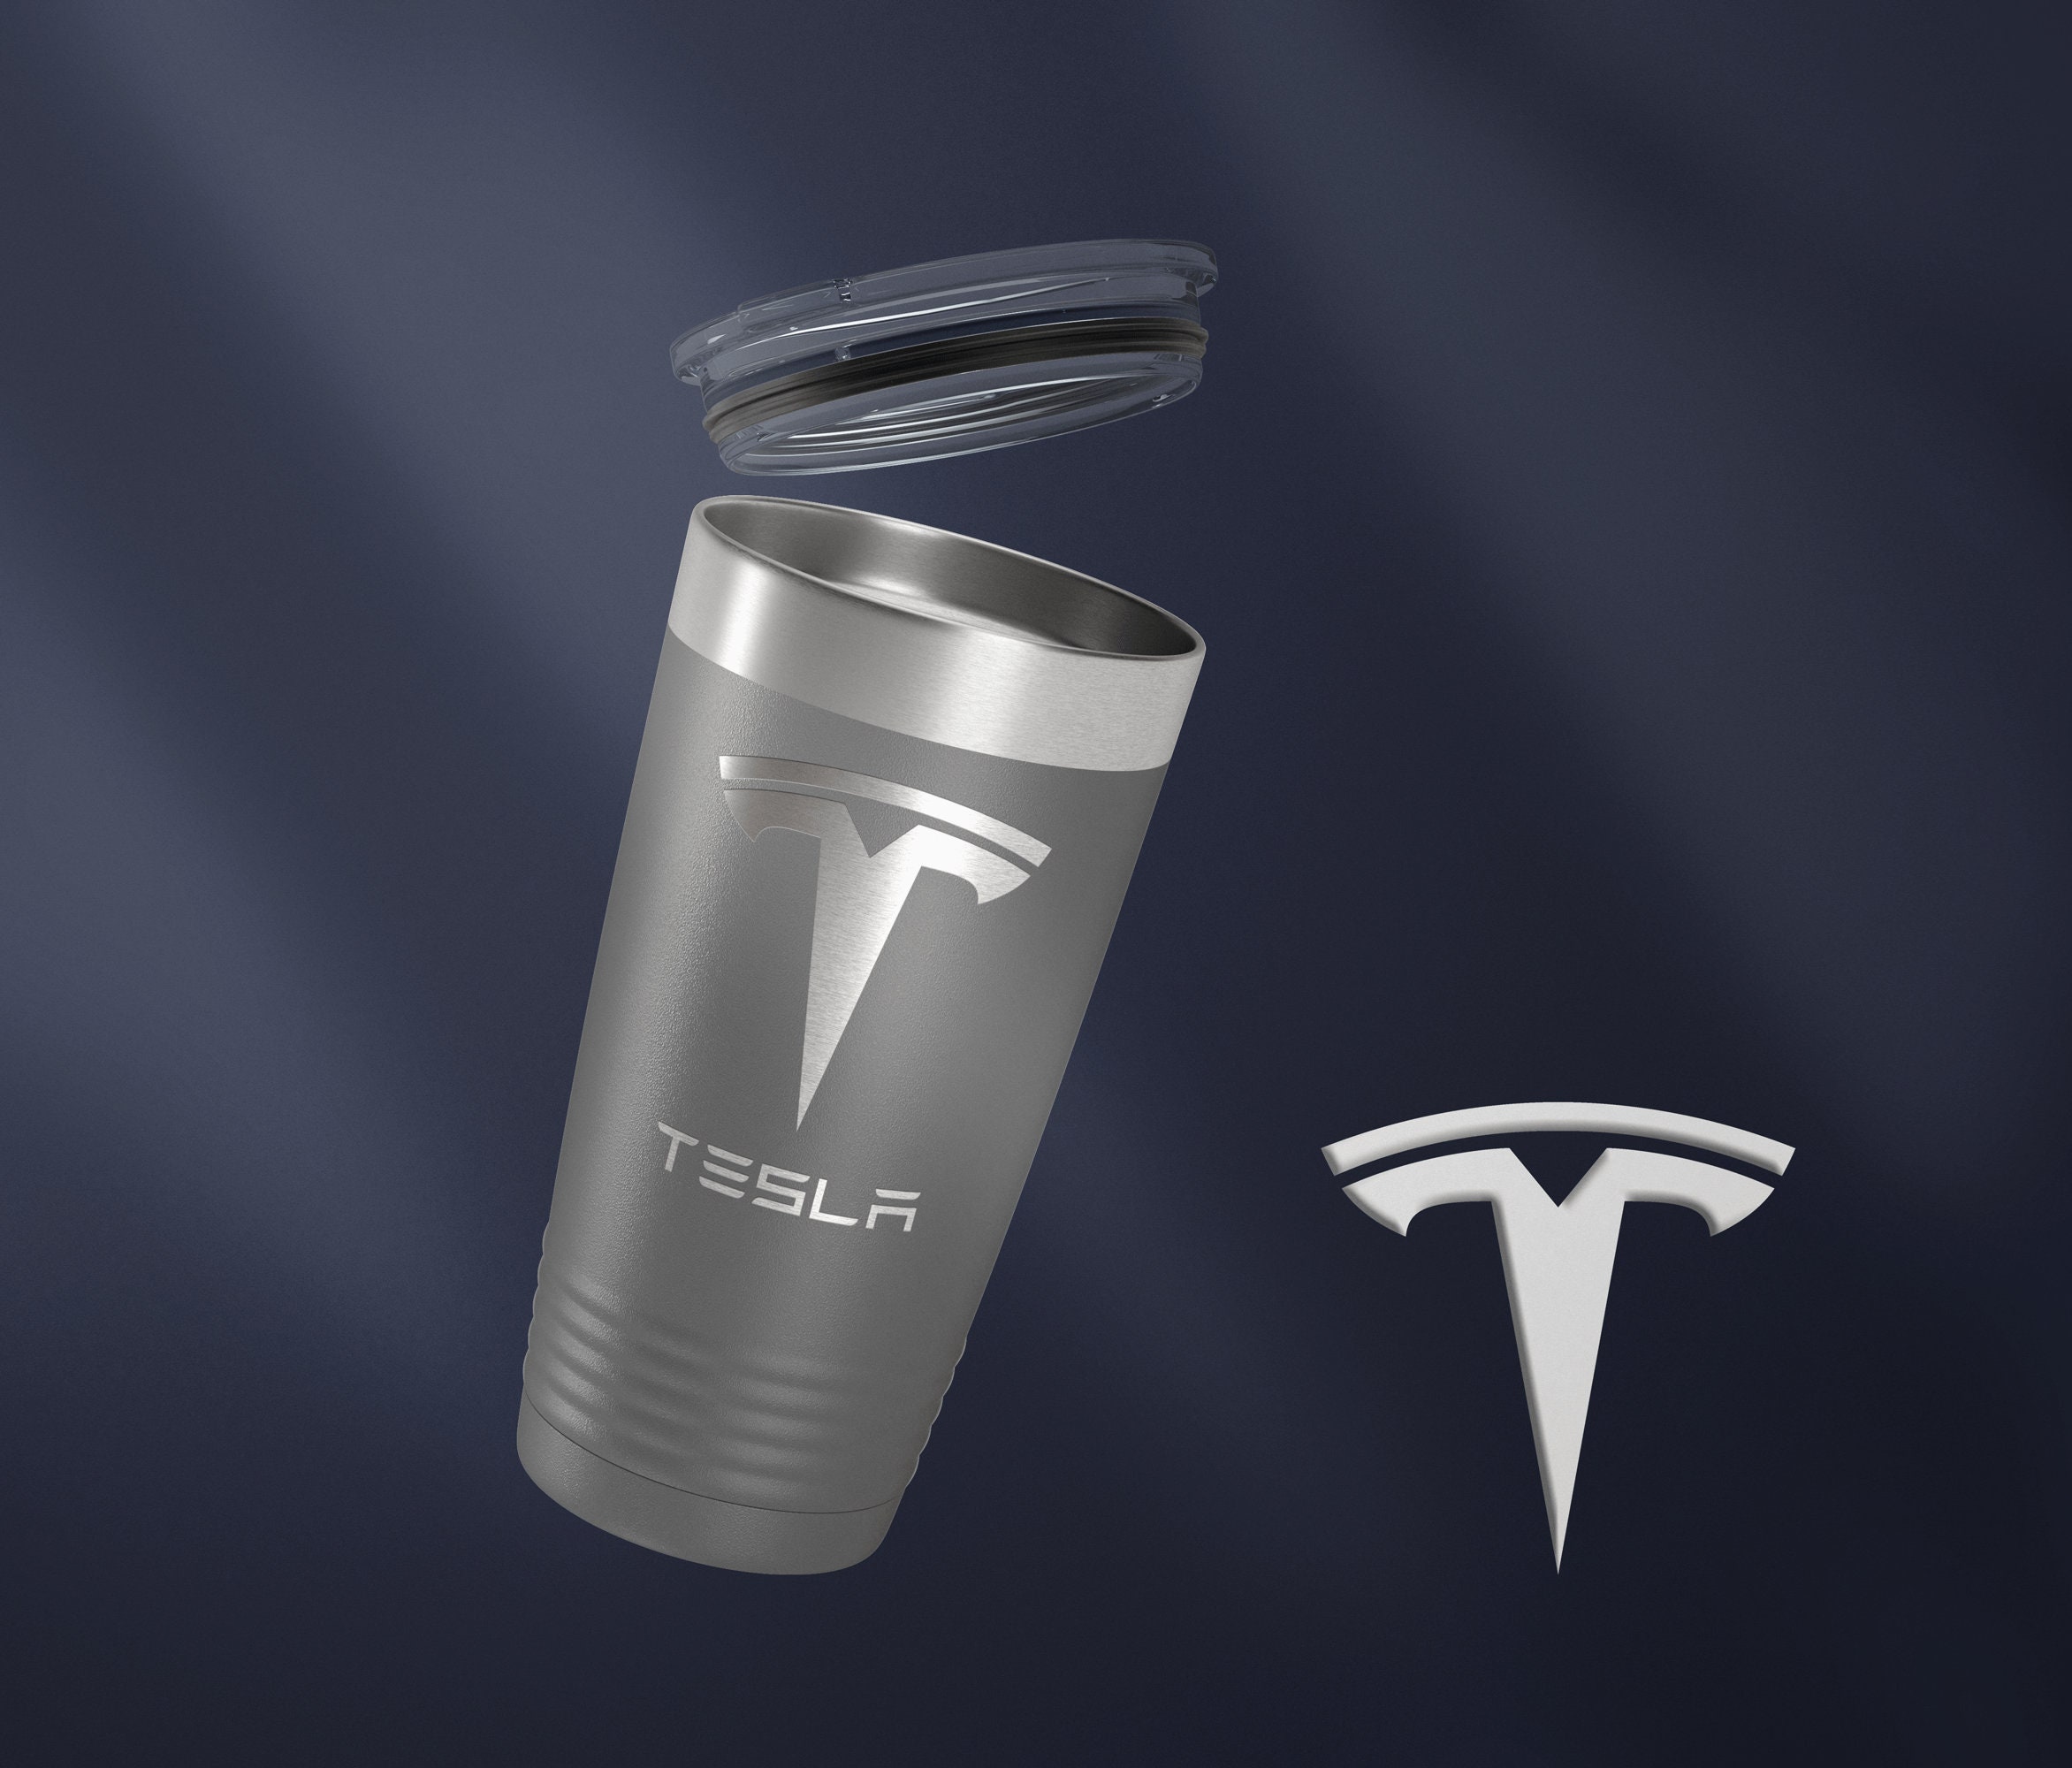 Tesla Coffee Cup Tumbler, 20 Ounces